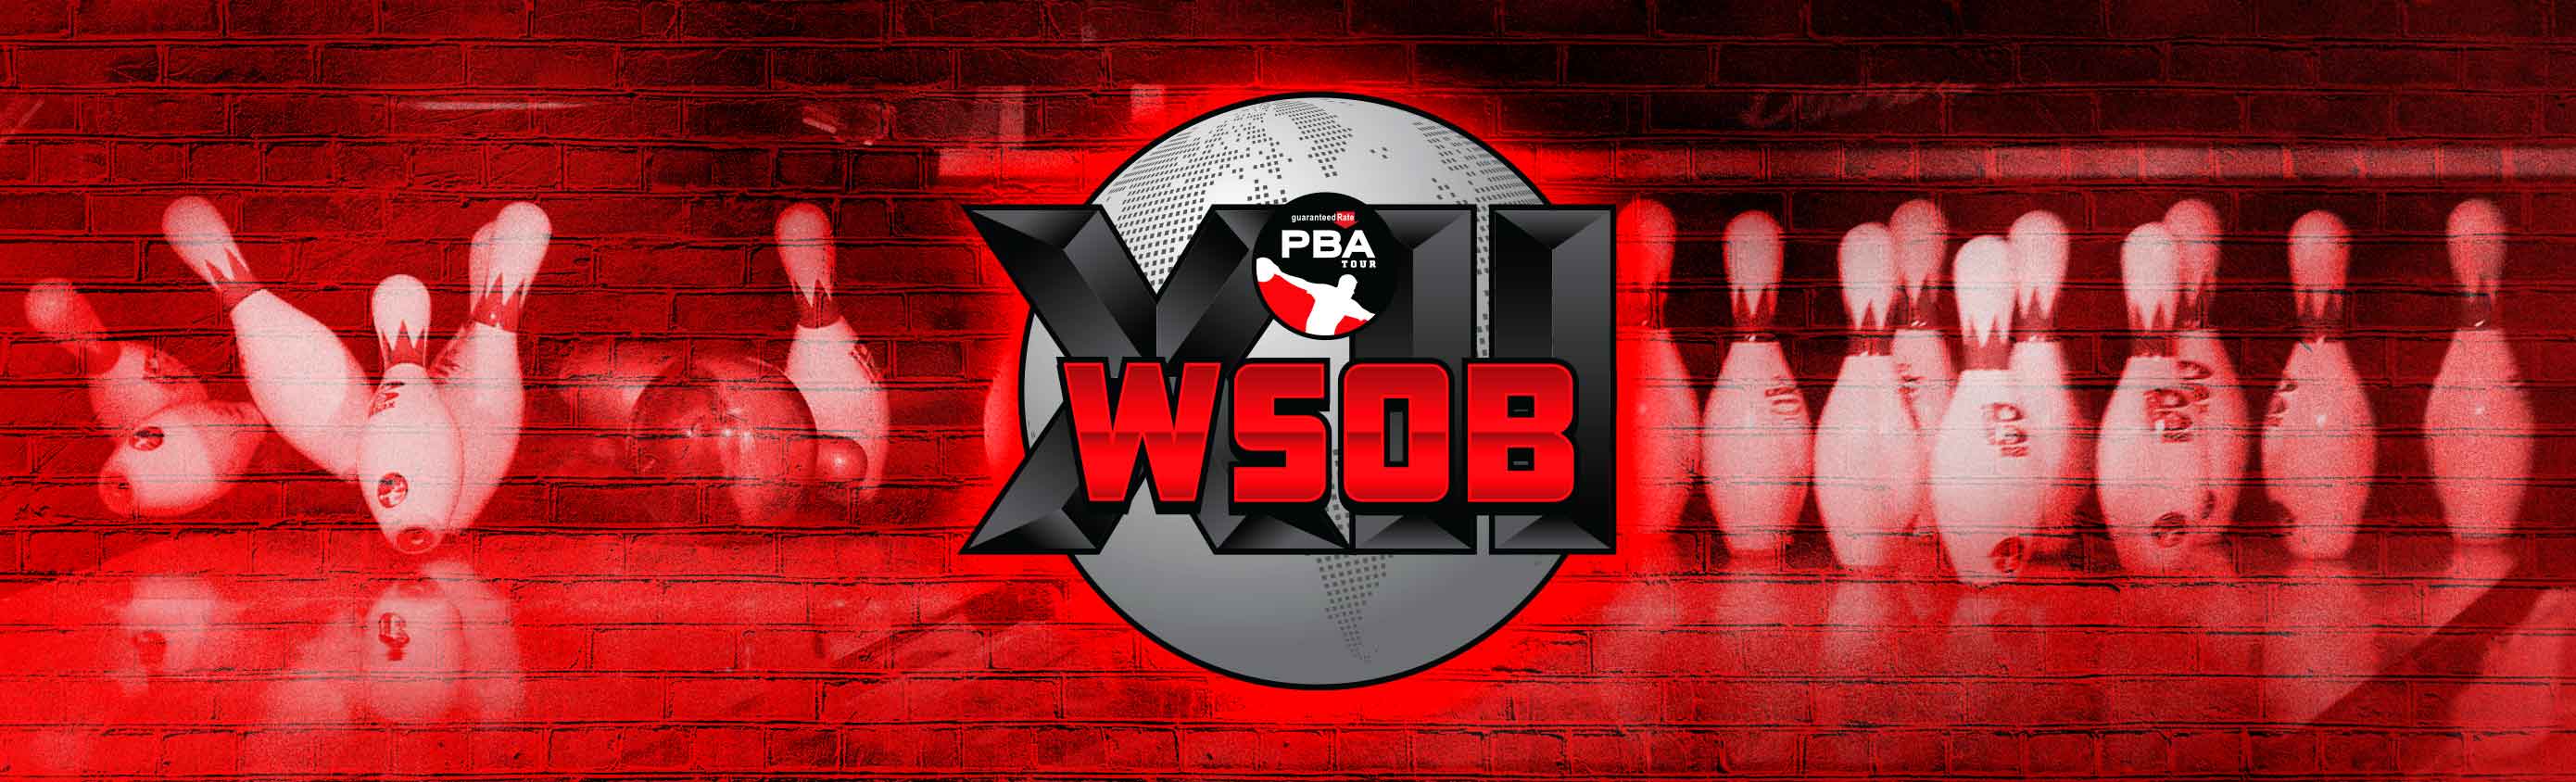 PBA Guaranteed Rate World Championship - WSOB/ PTQ (Pro Tour Qualifier